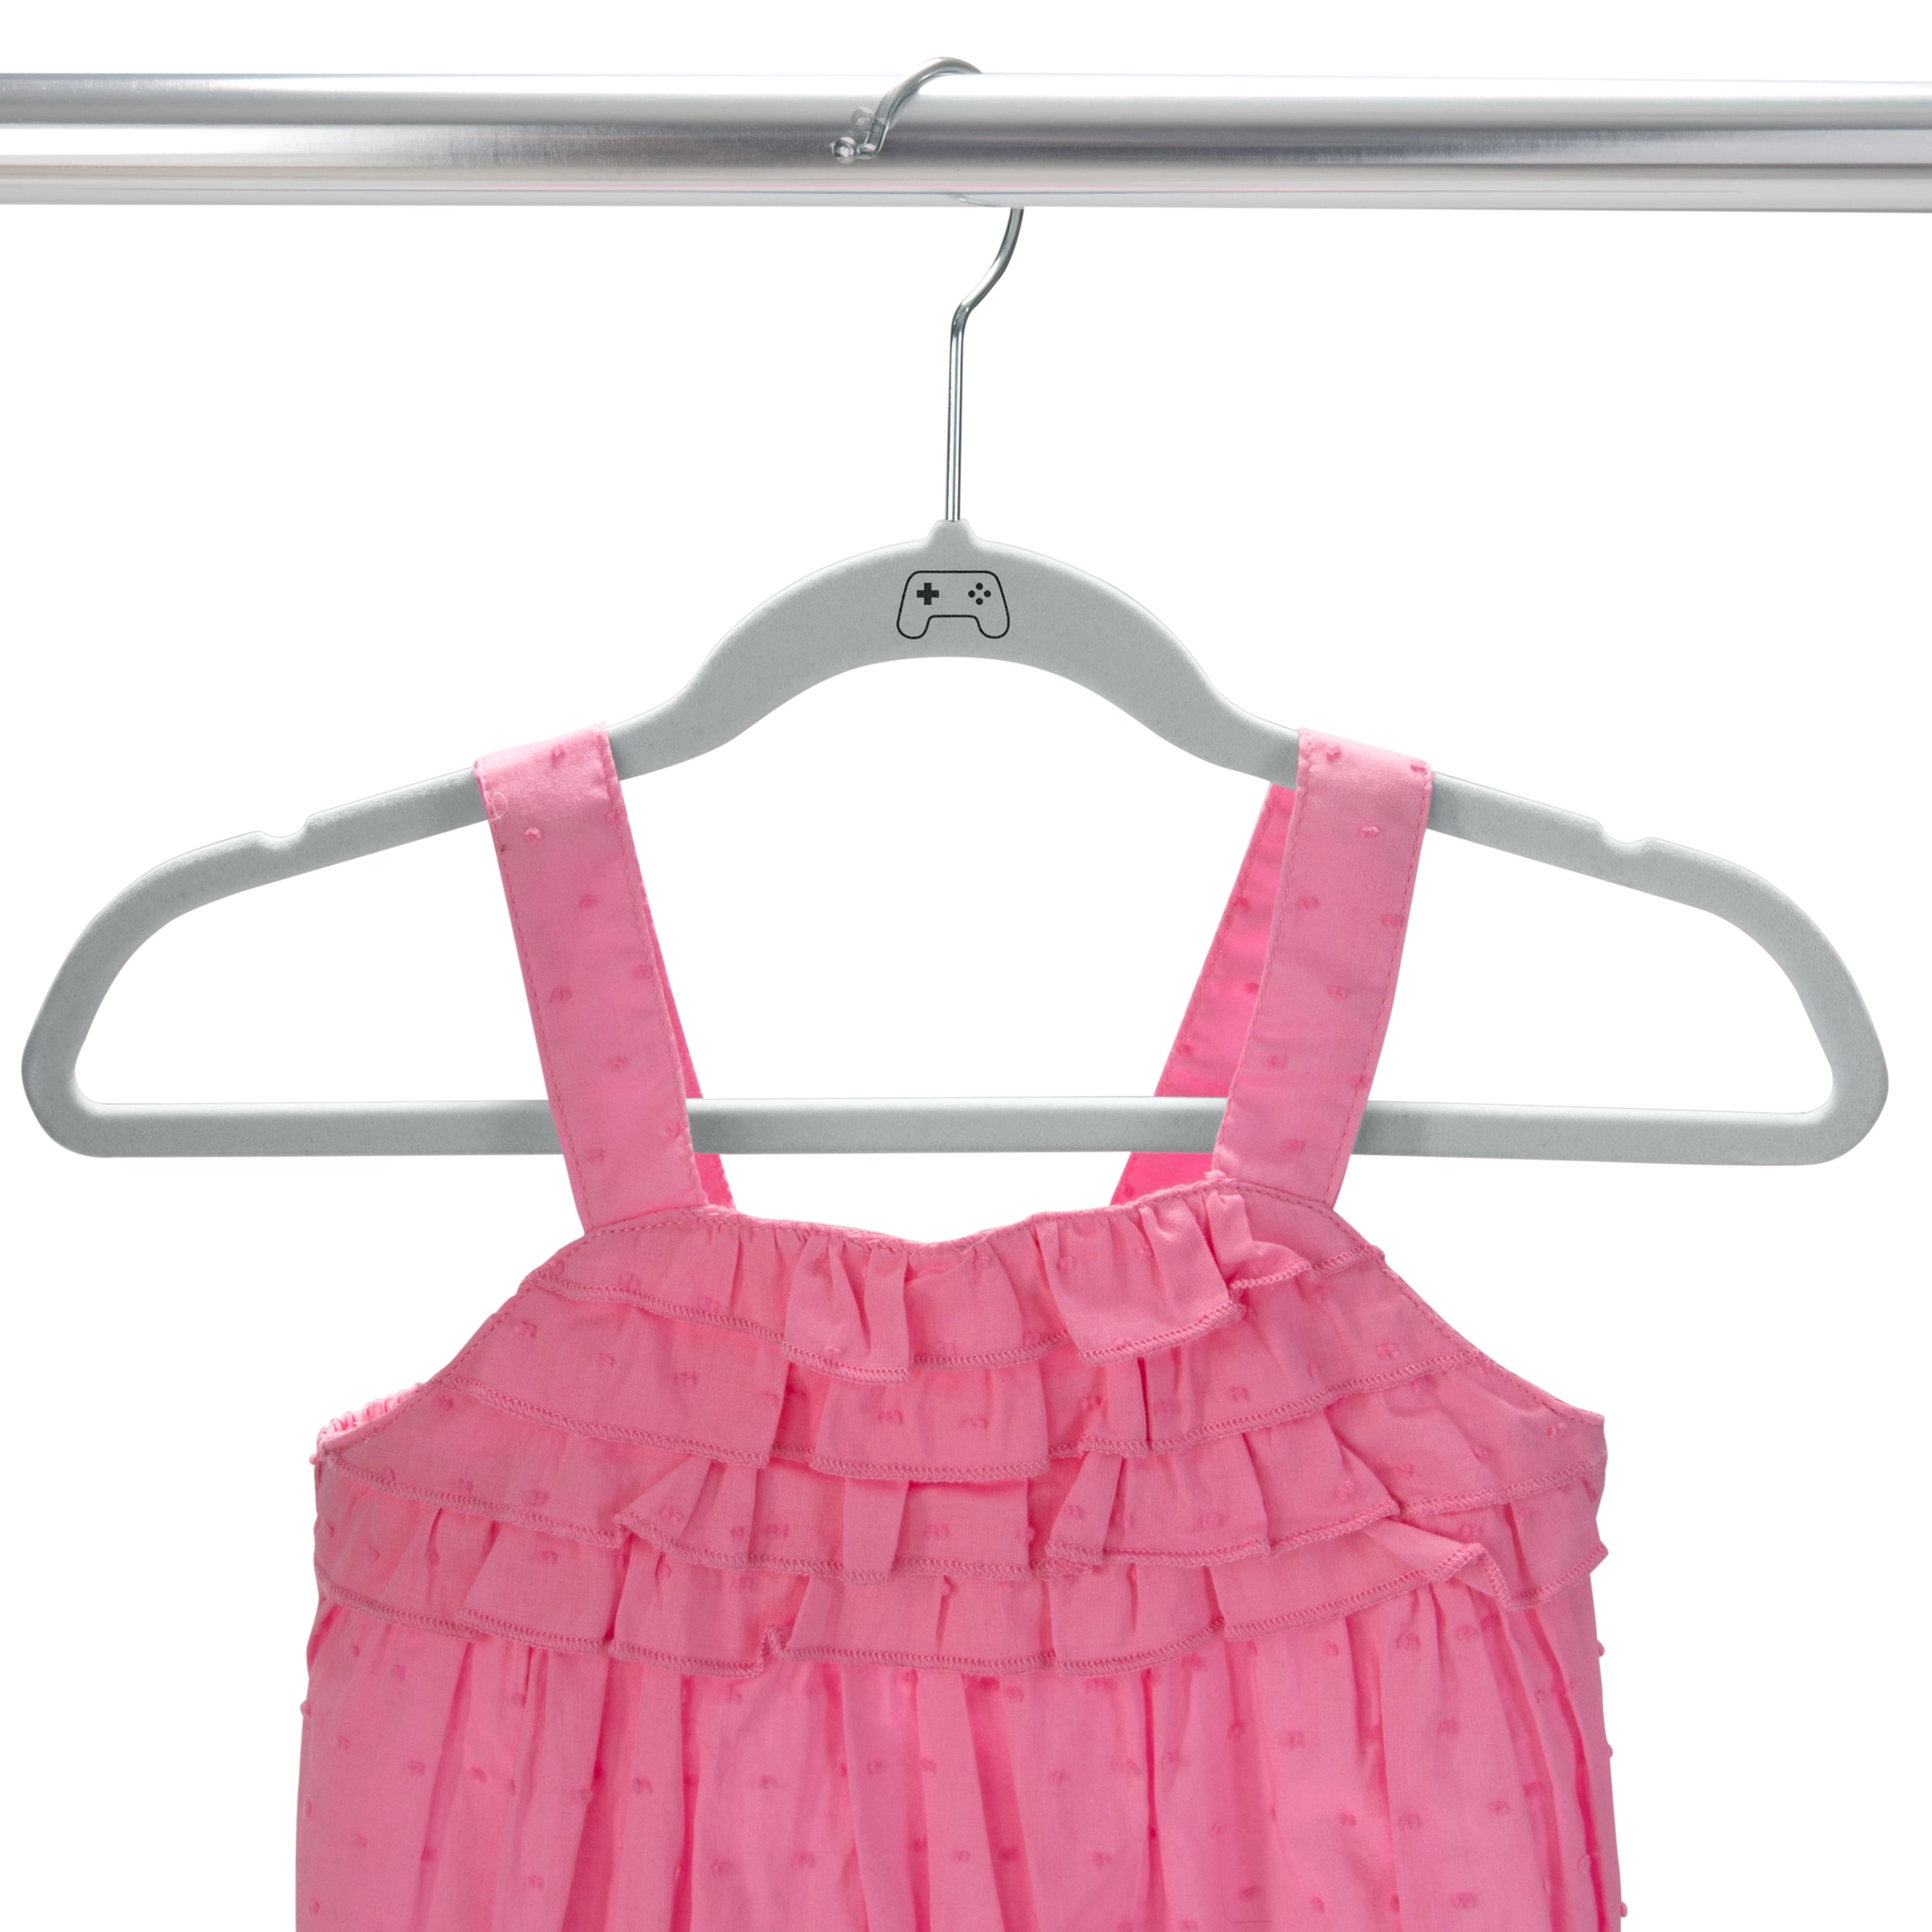 Saura Cutie Kids Clothes Hangers 12pc Blue+Pink